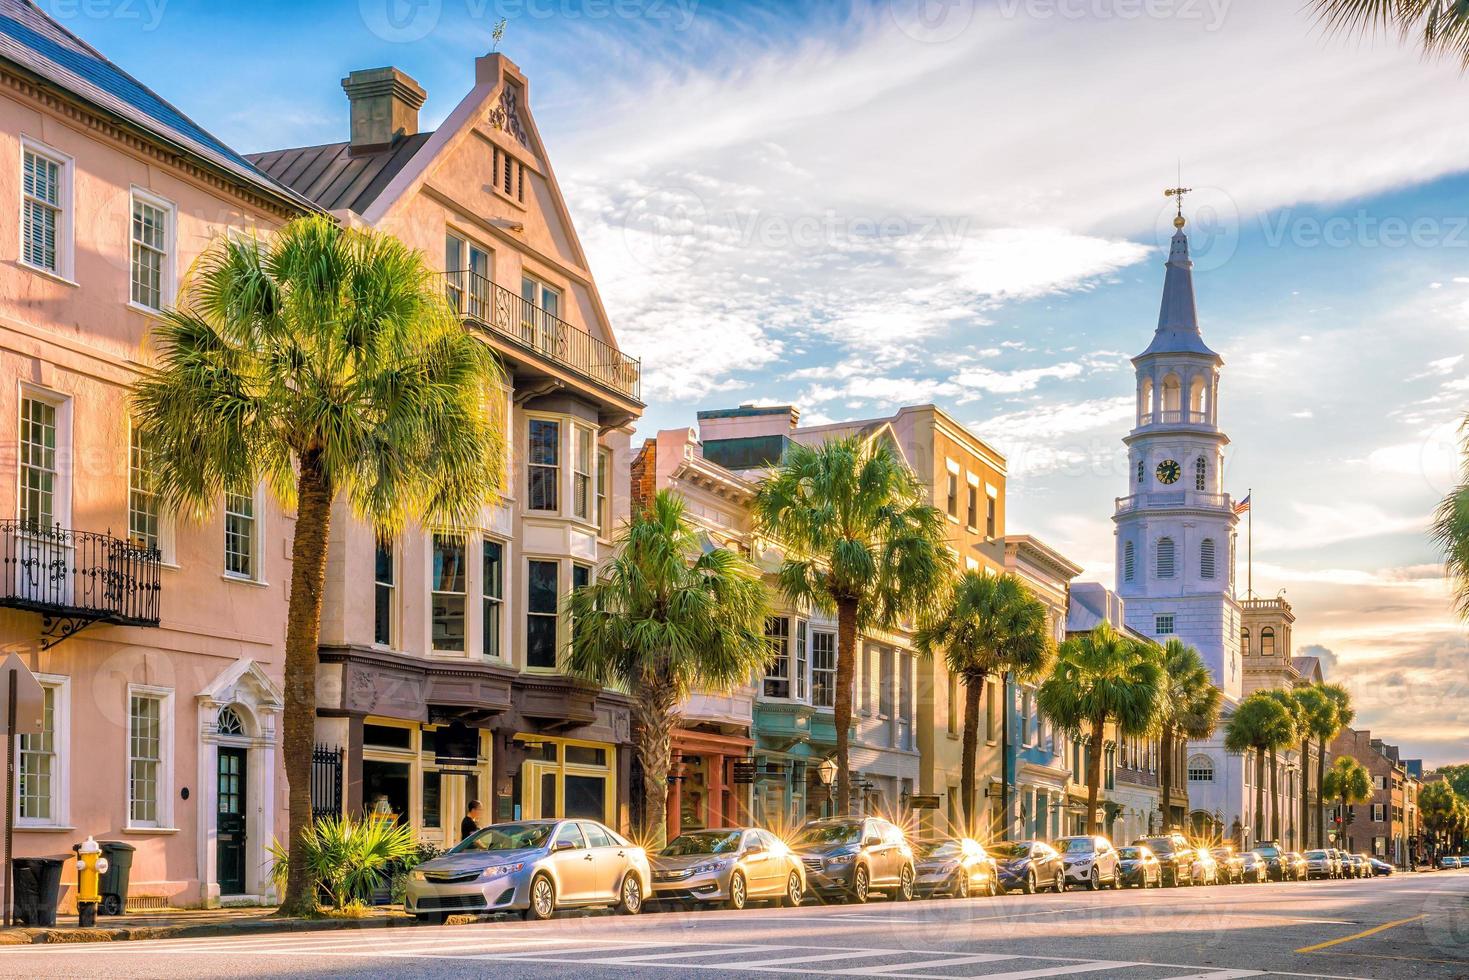 Charleston, South Carolina, Verenigde Staten foto